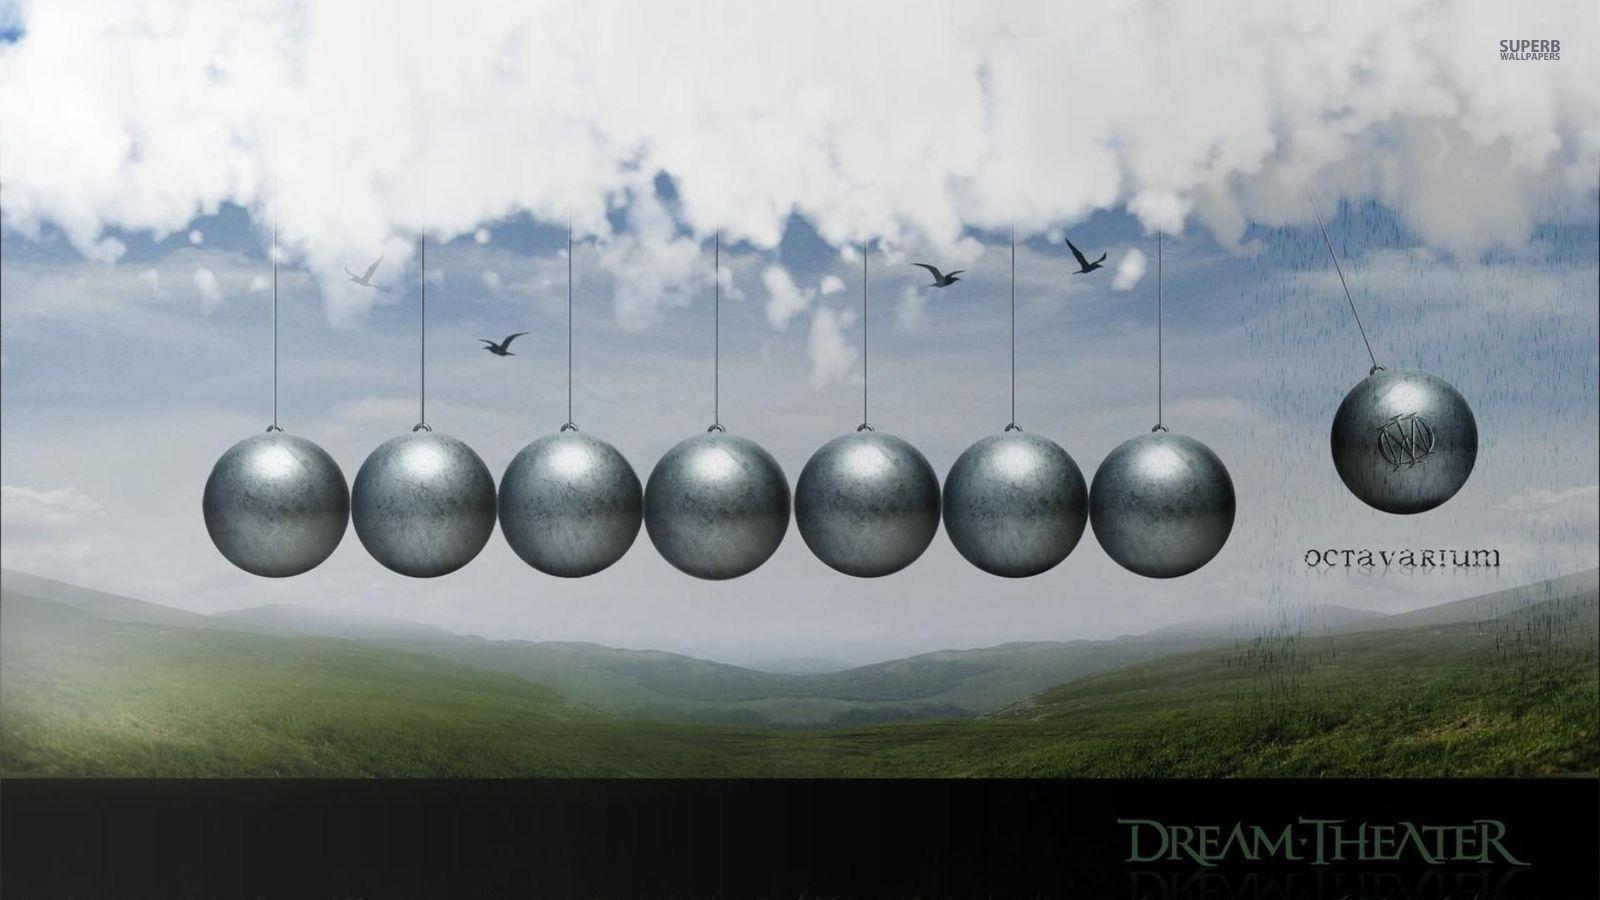 Dream Theater image Octavarium HD wallpaper and background photo